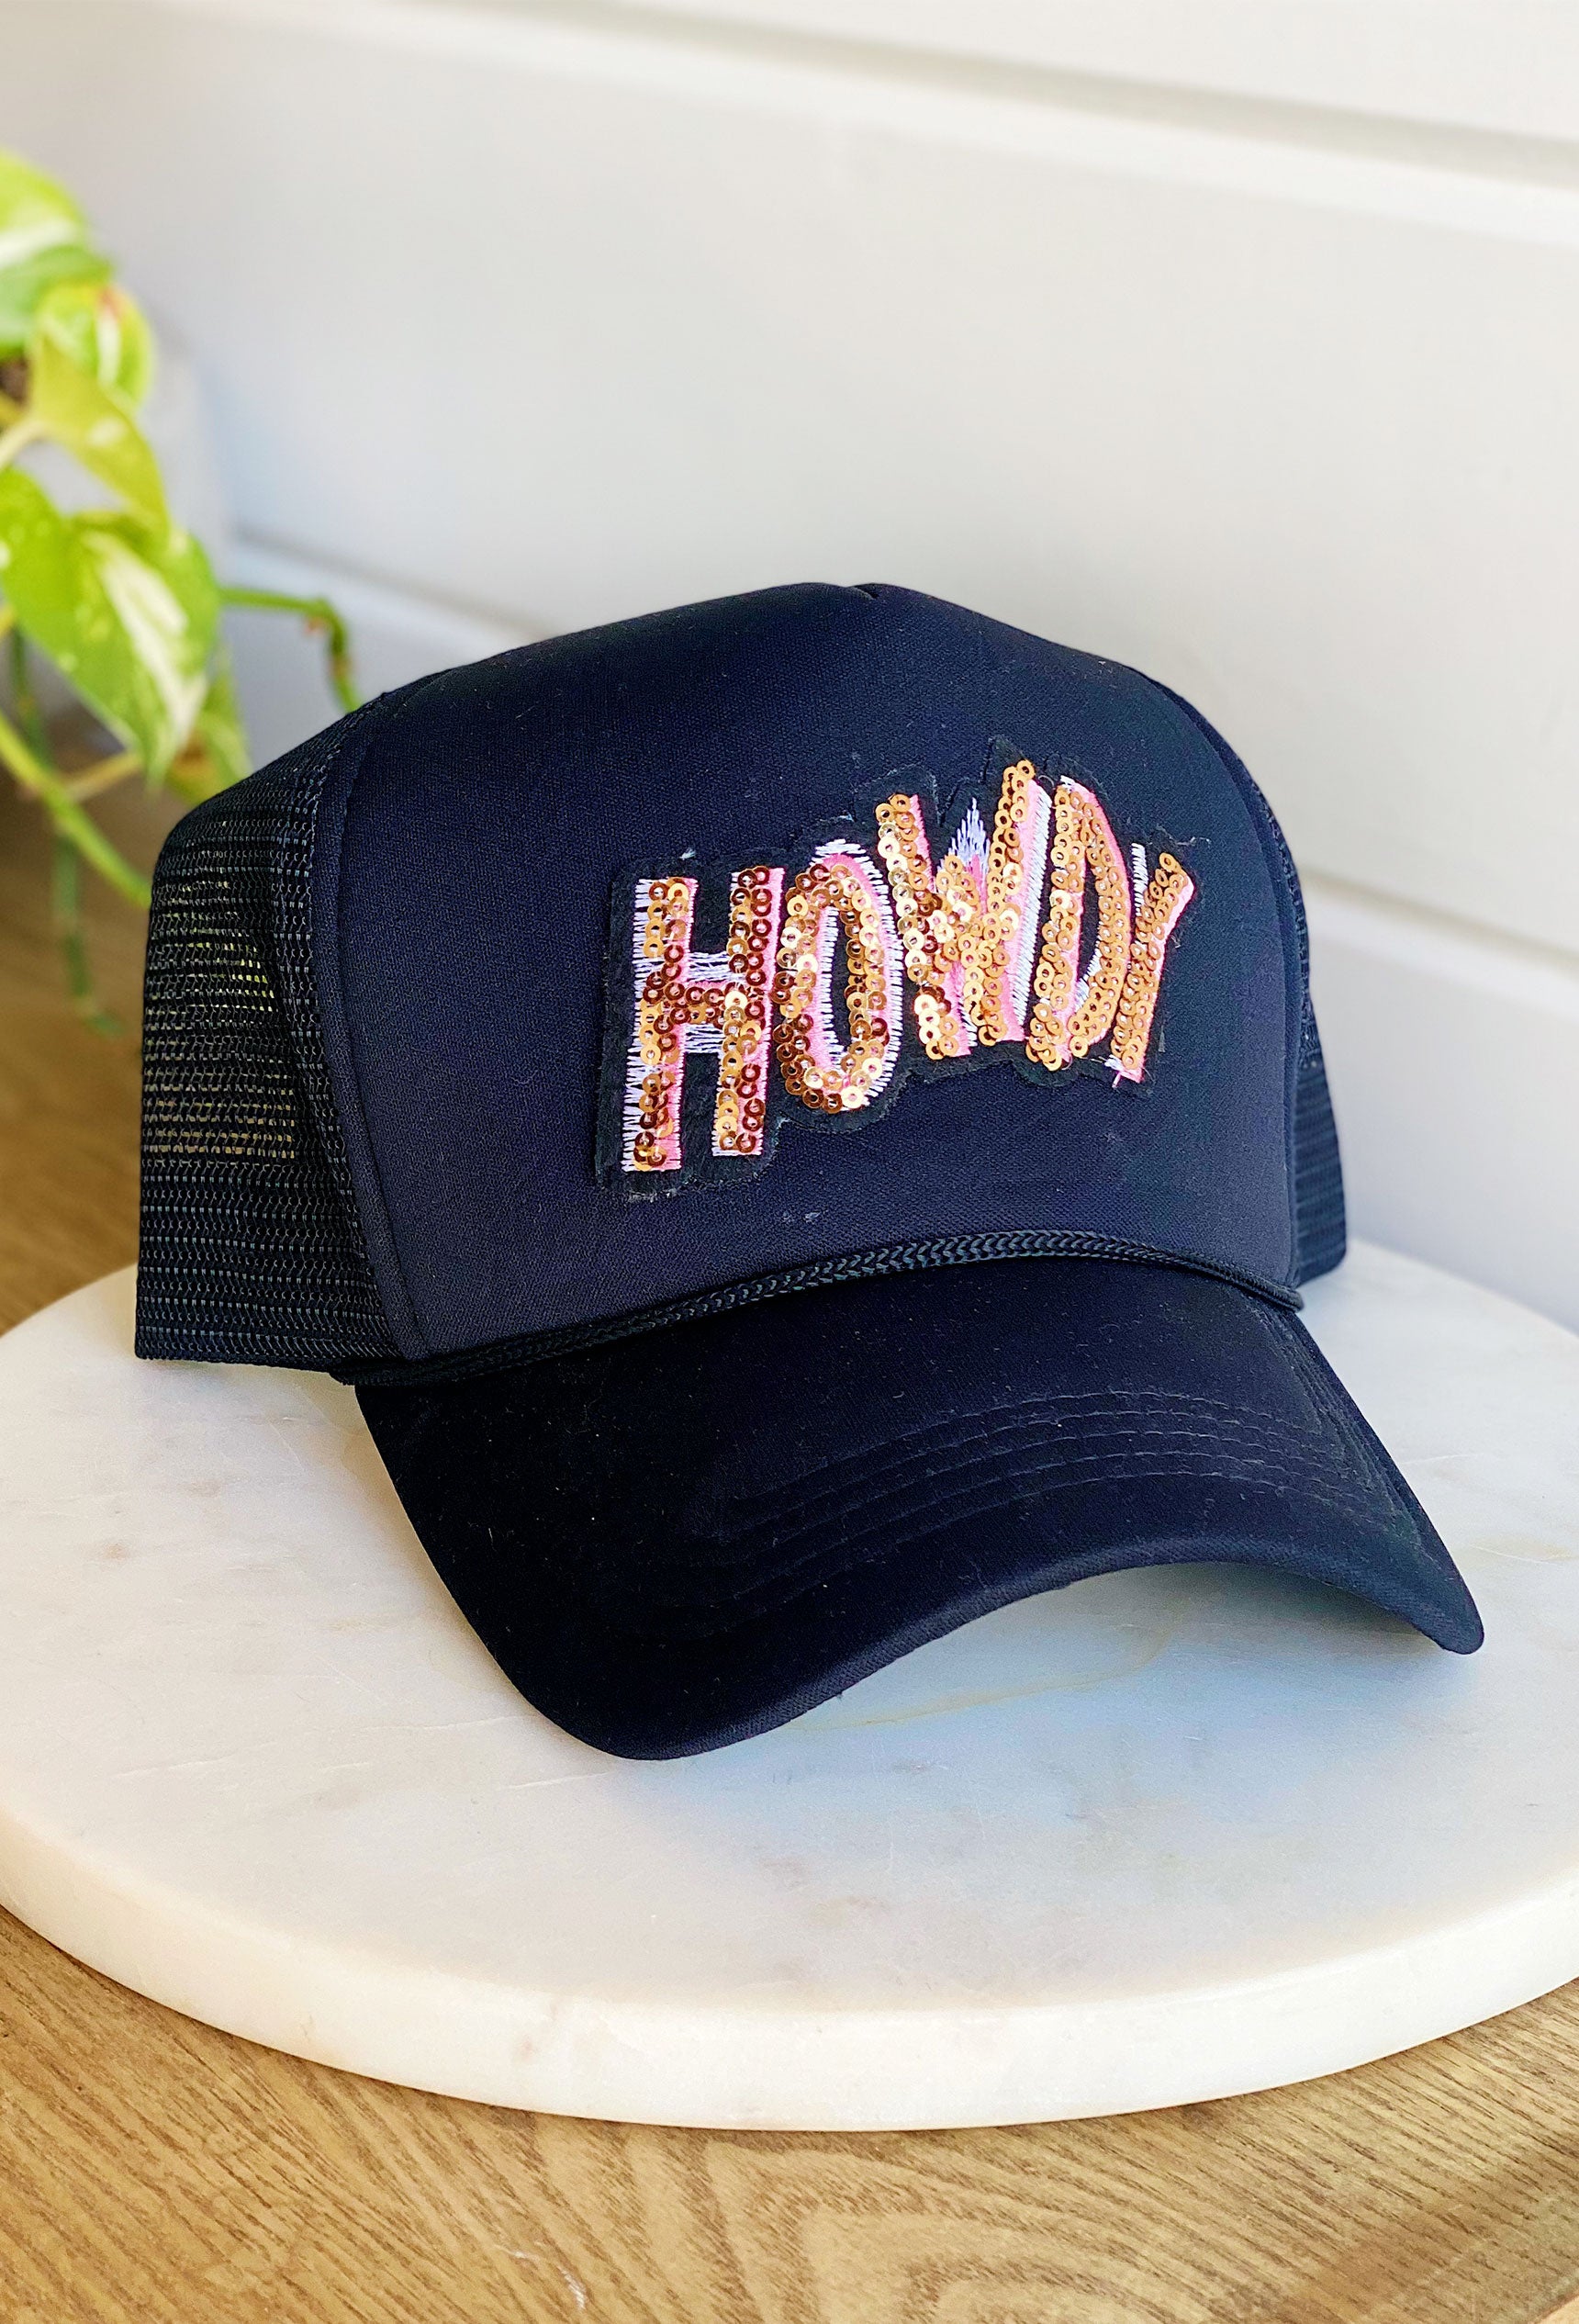 Howdy Sequin Trucker Hat, black trucker hat, howdy written across front in sequins and pink shadowed